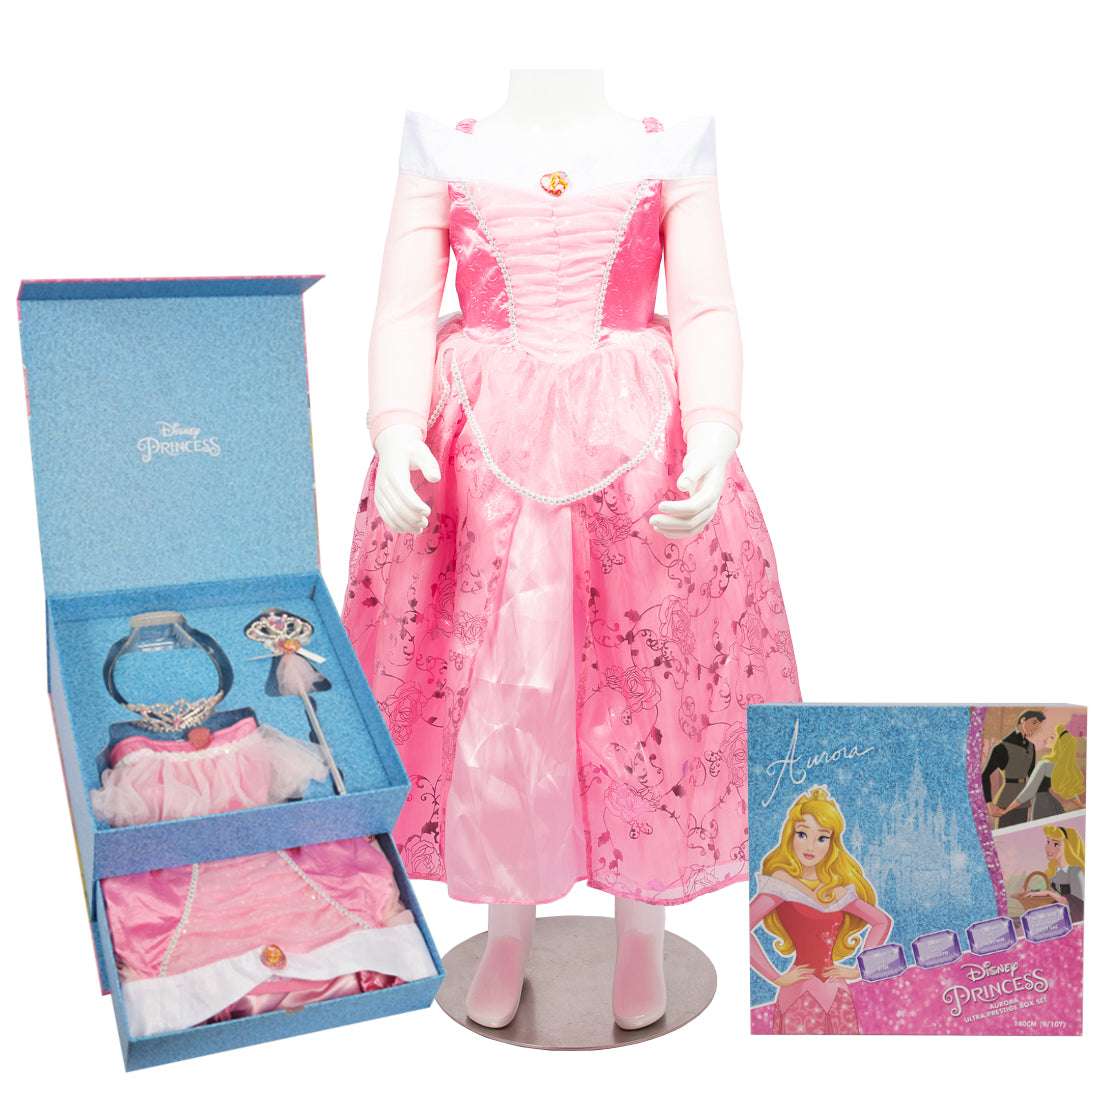 Child Aurora Ultra Prestige Costume Box Set